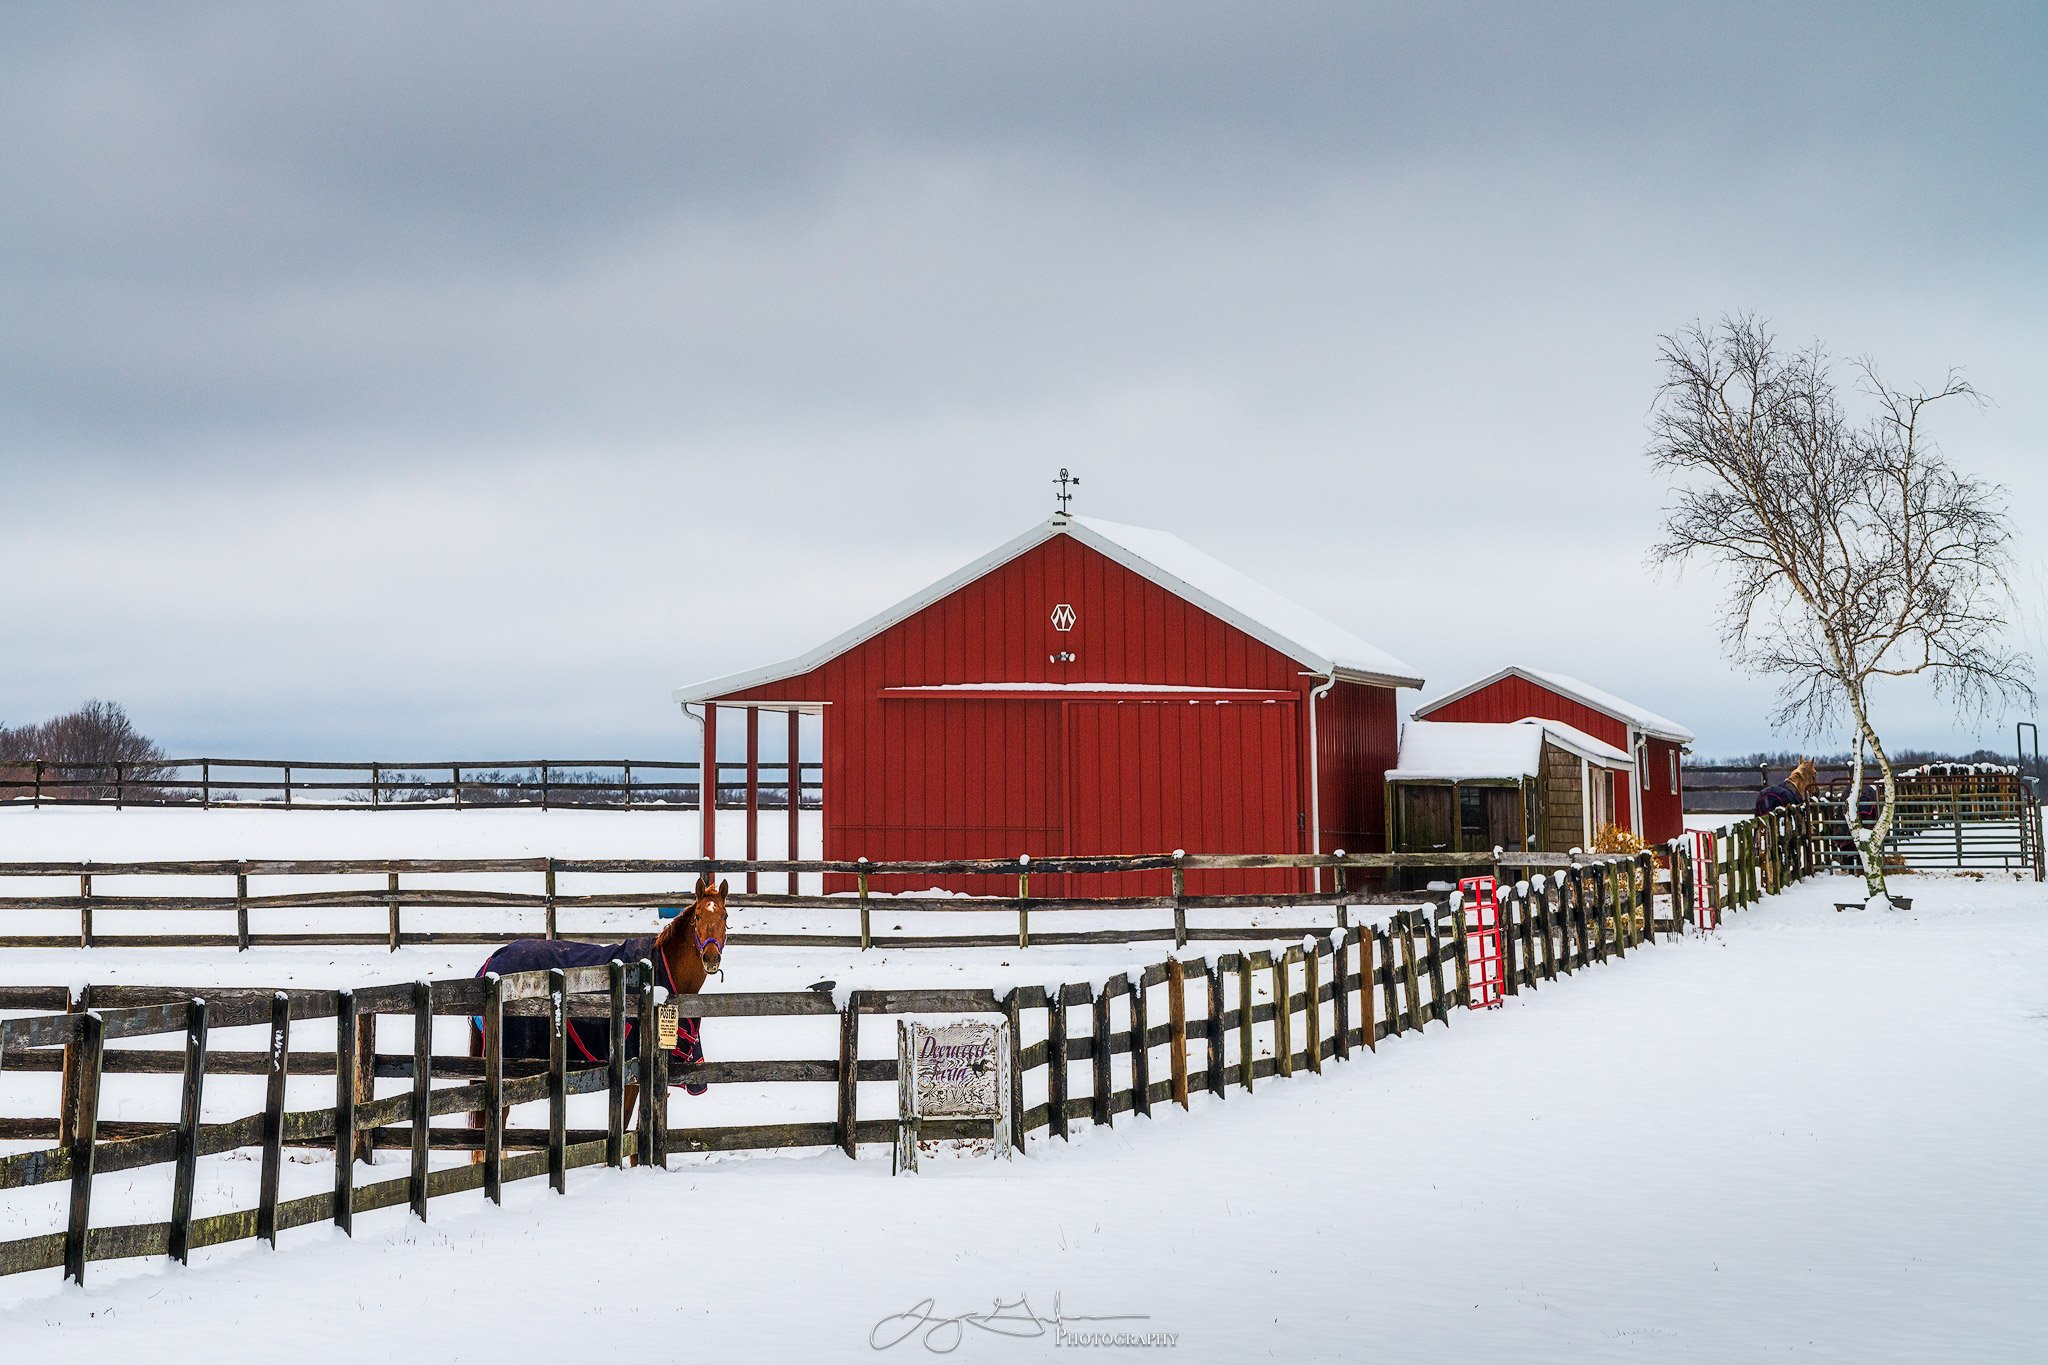 North-Fork-Horse-Farm-in-Snow-sharpened.jpg